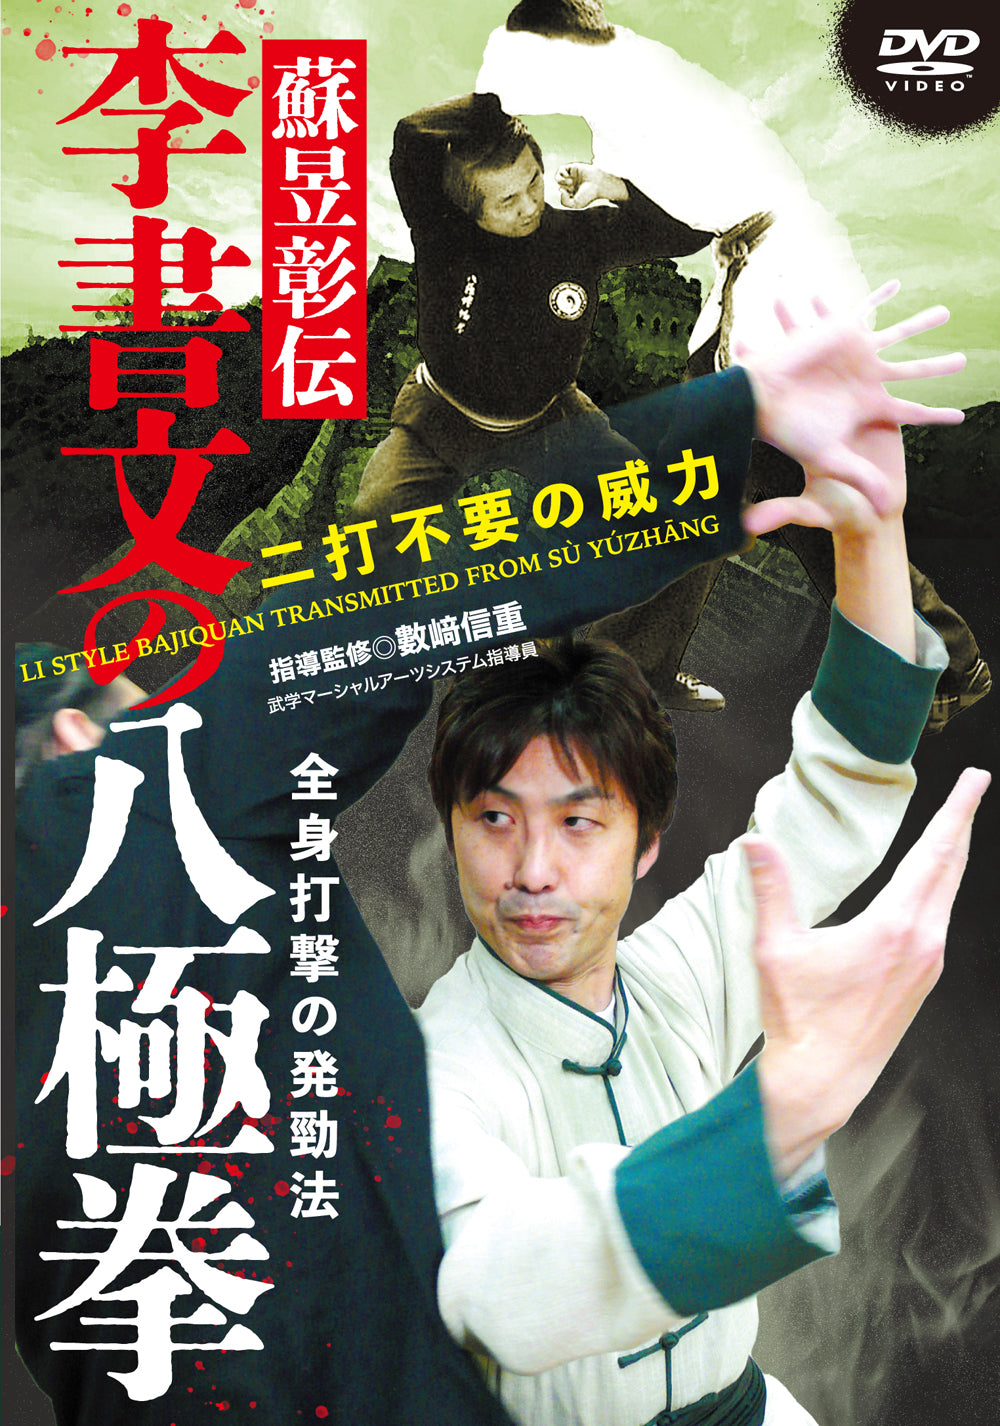 Li Style Bajiquan transmitido desde el DVD de Su Yuzhang por Nobushige Kazusaki